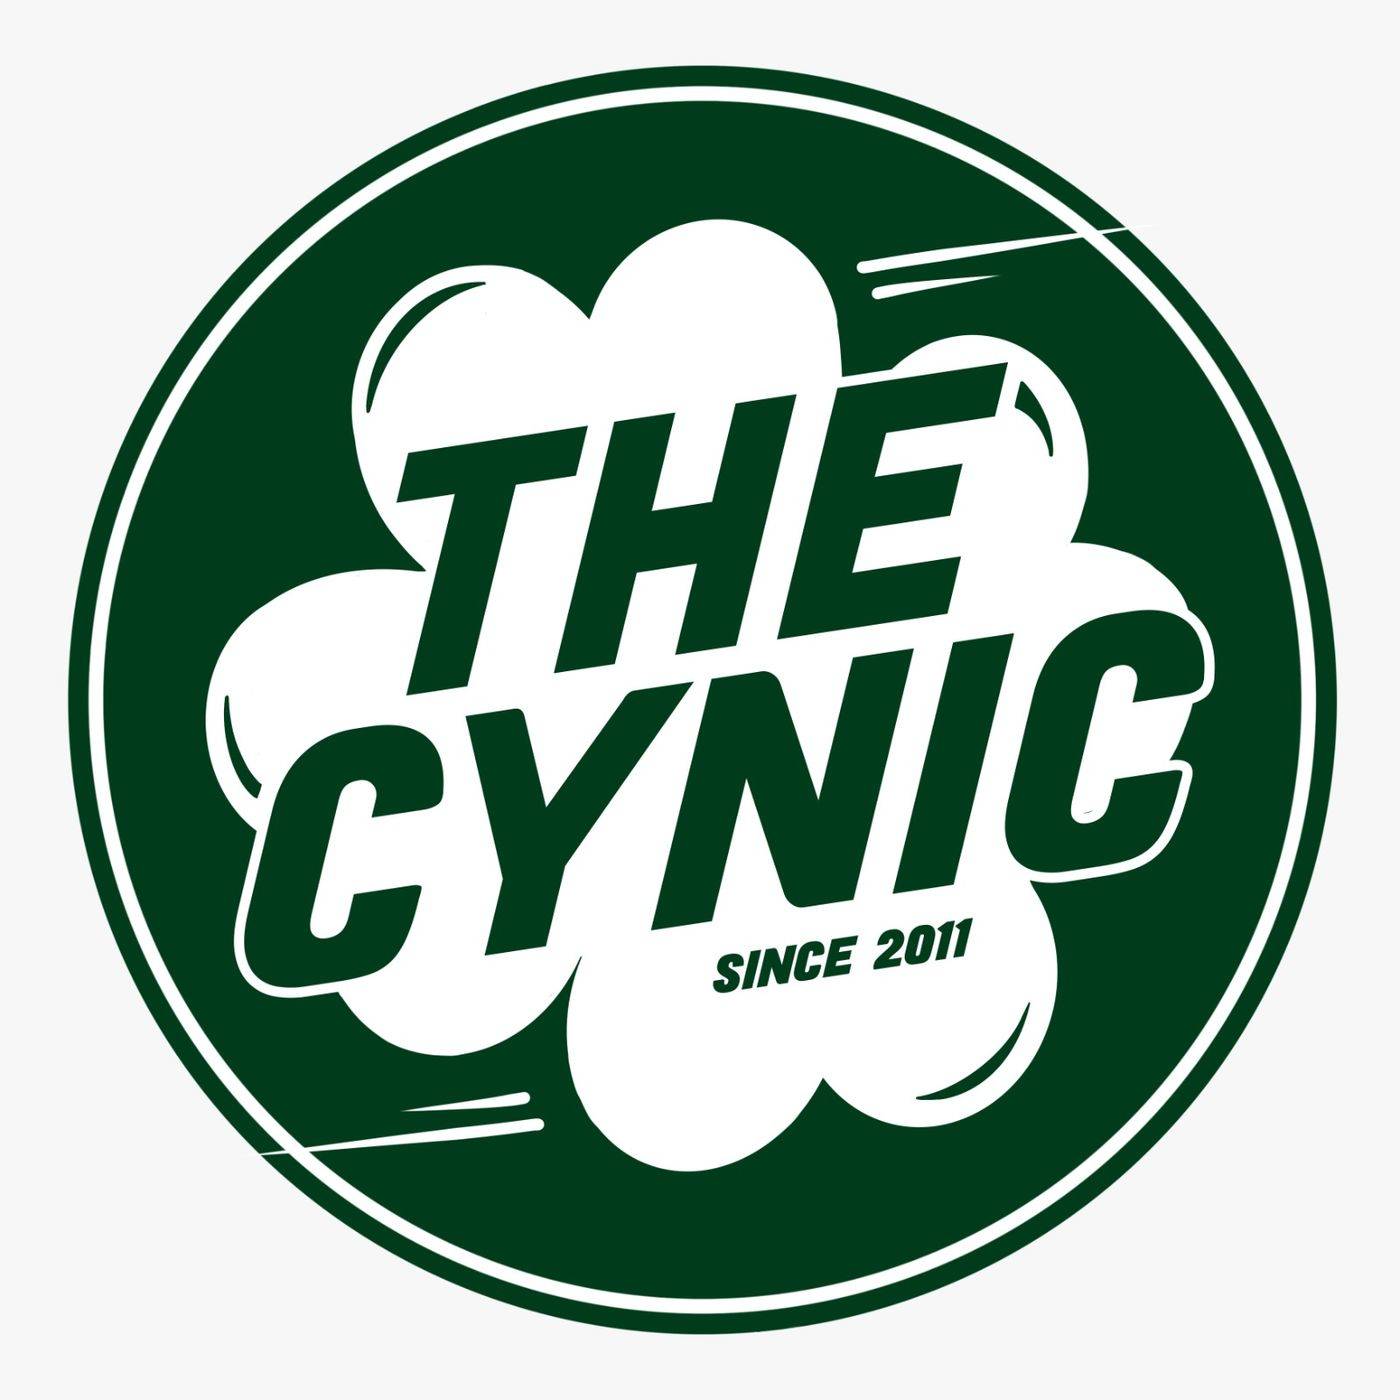 The Cynic Weekly – 15.02.2024